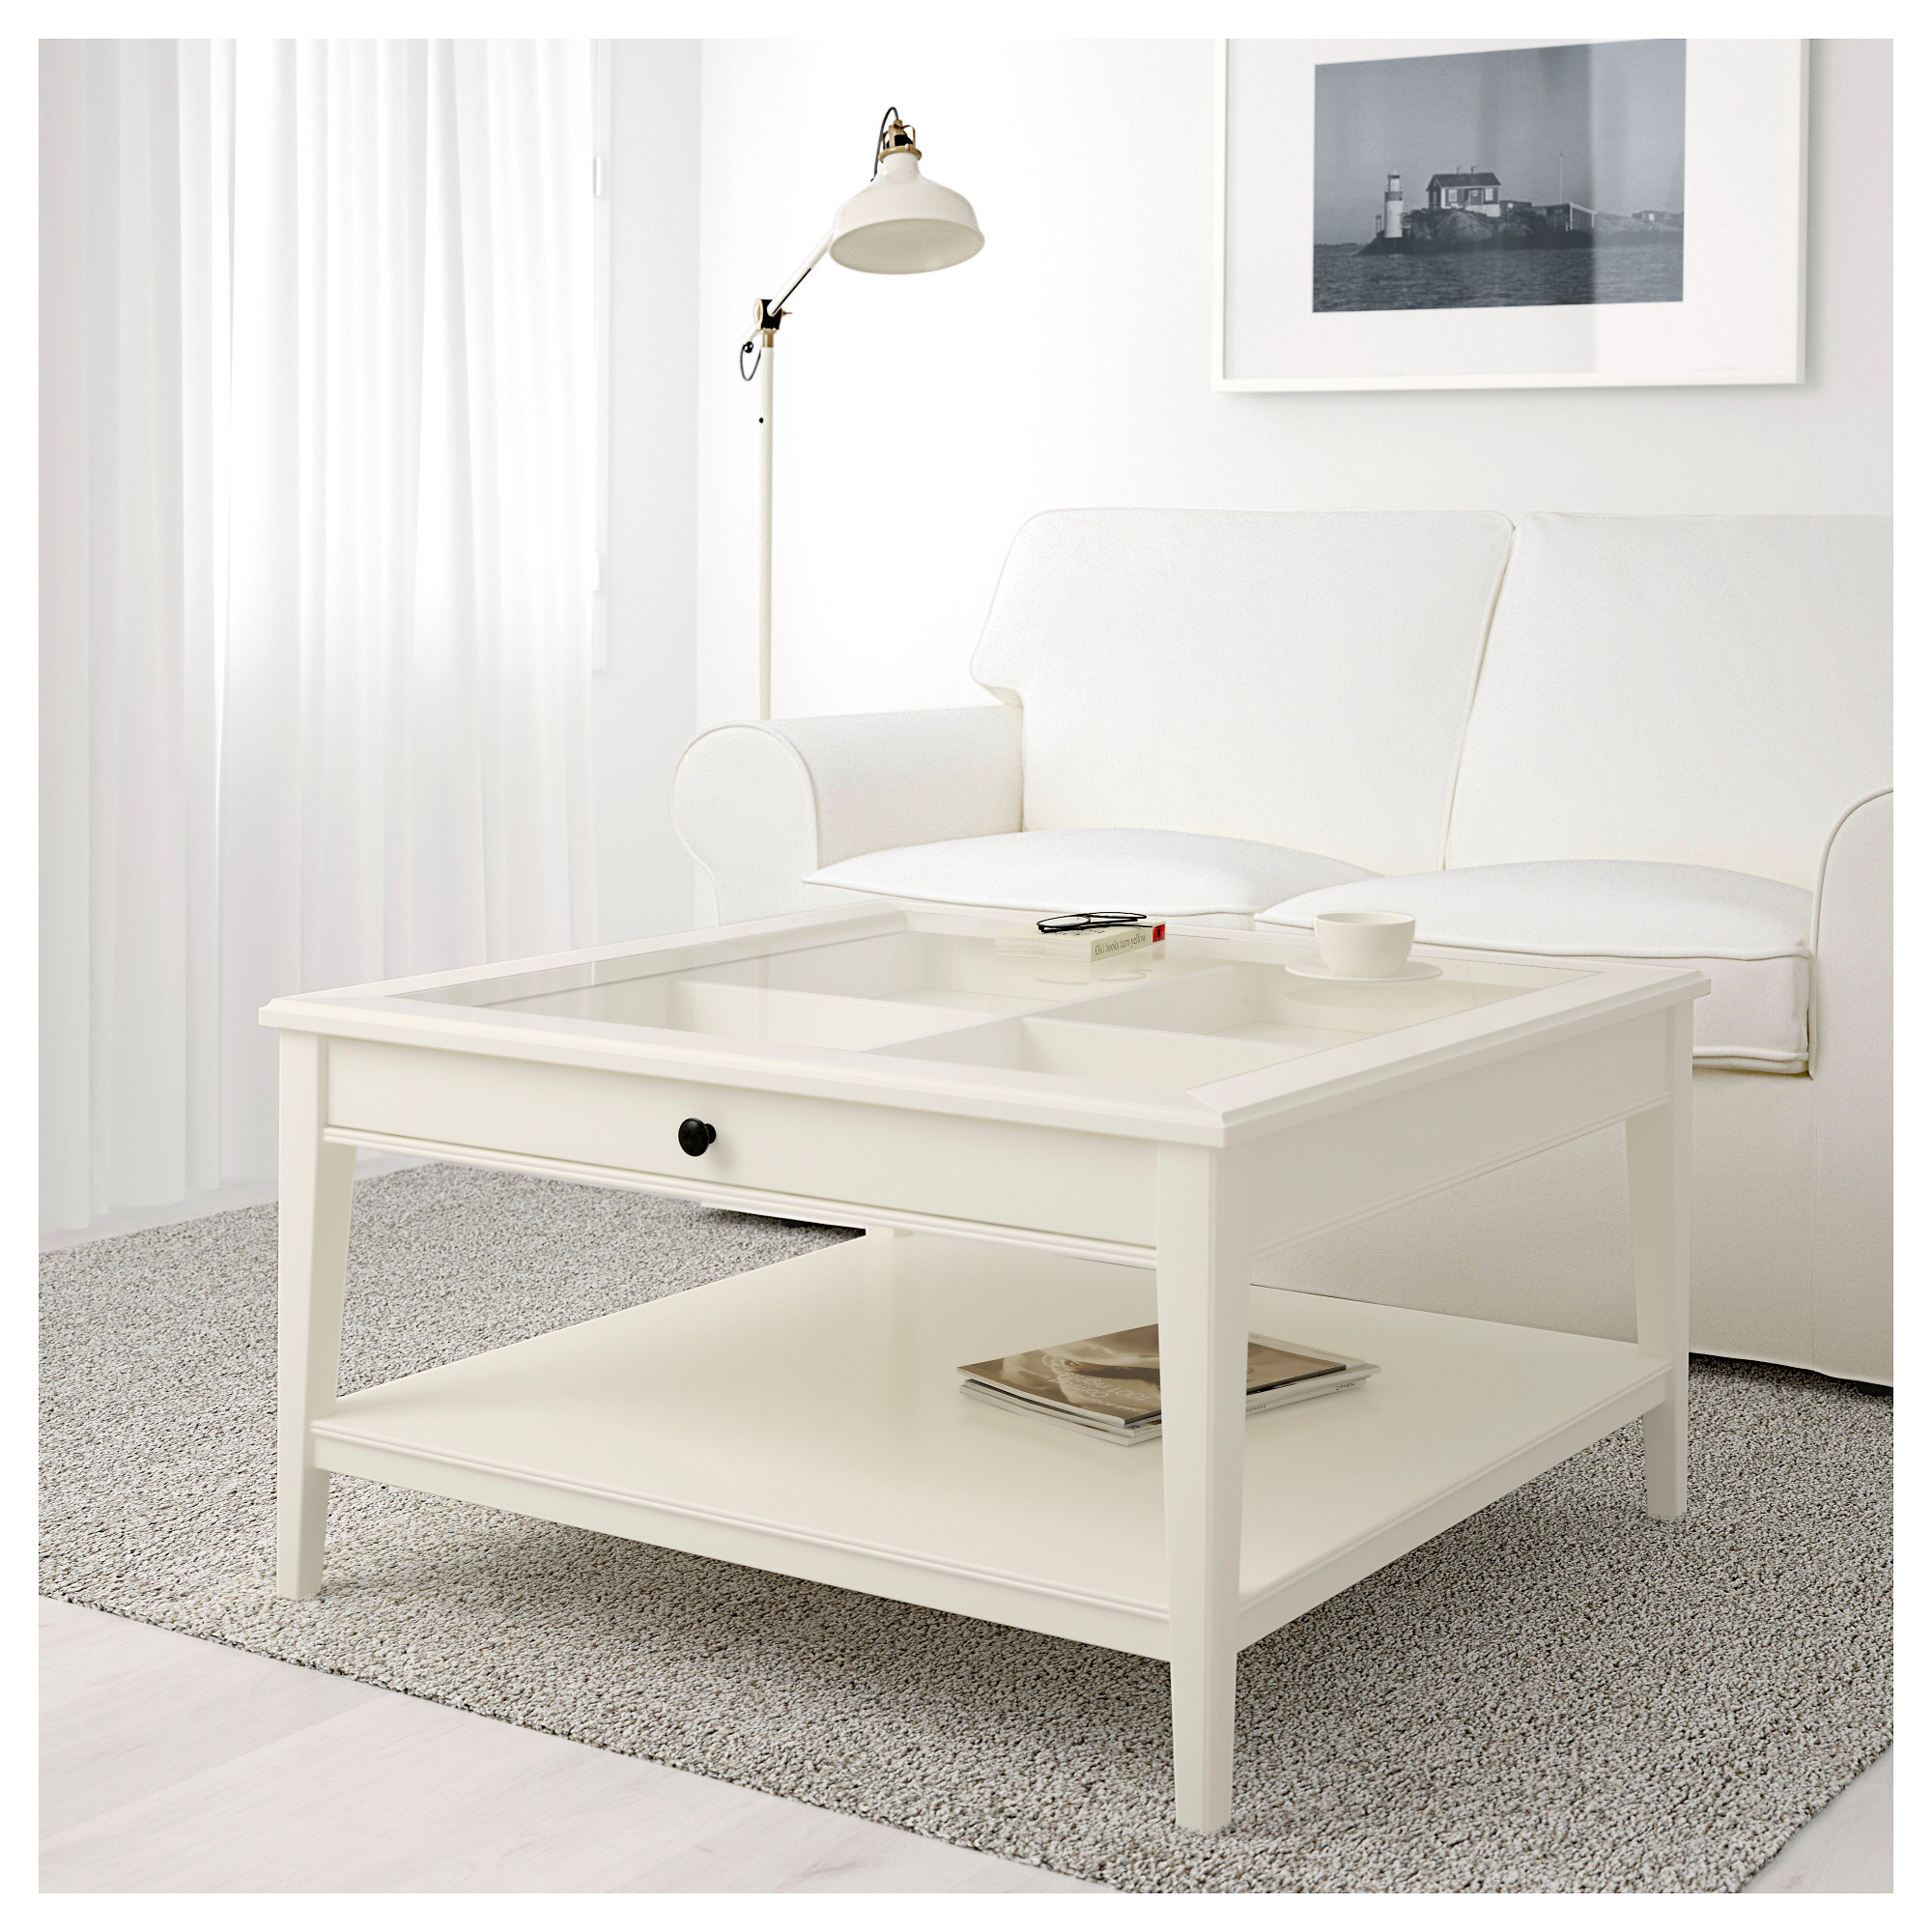 LIATORP coffee table, white/glass IKEA Indonesia